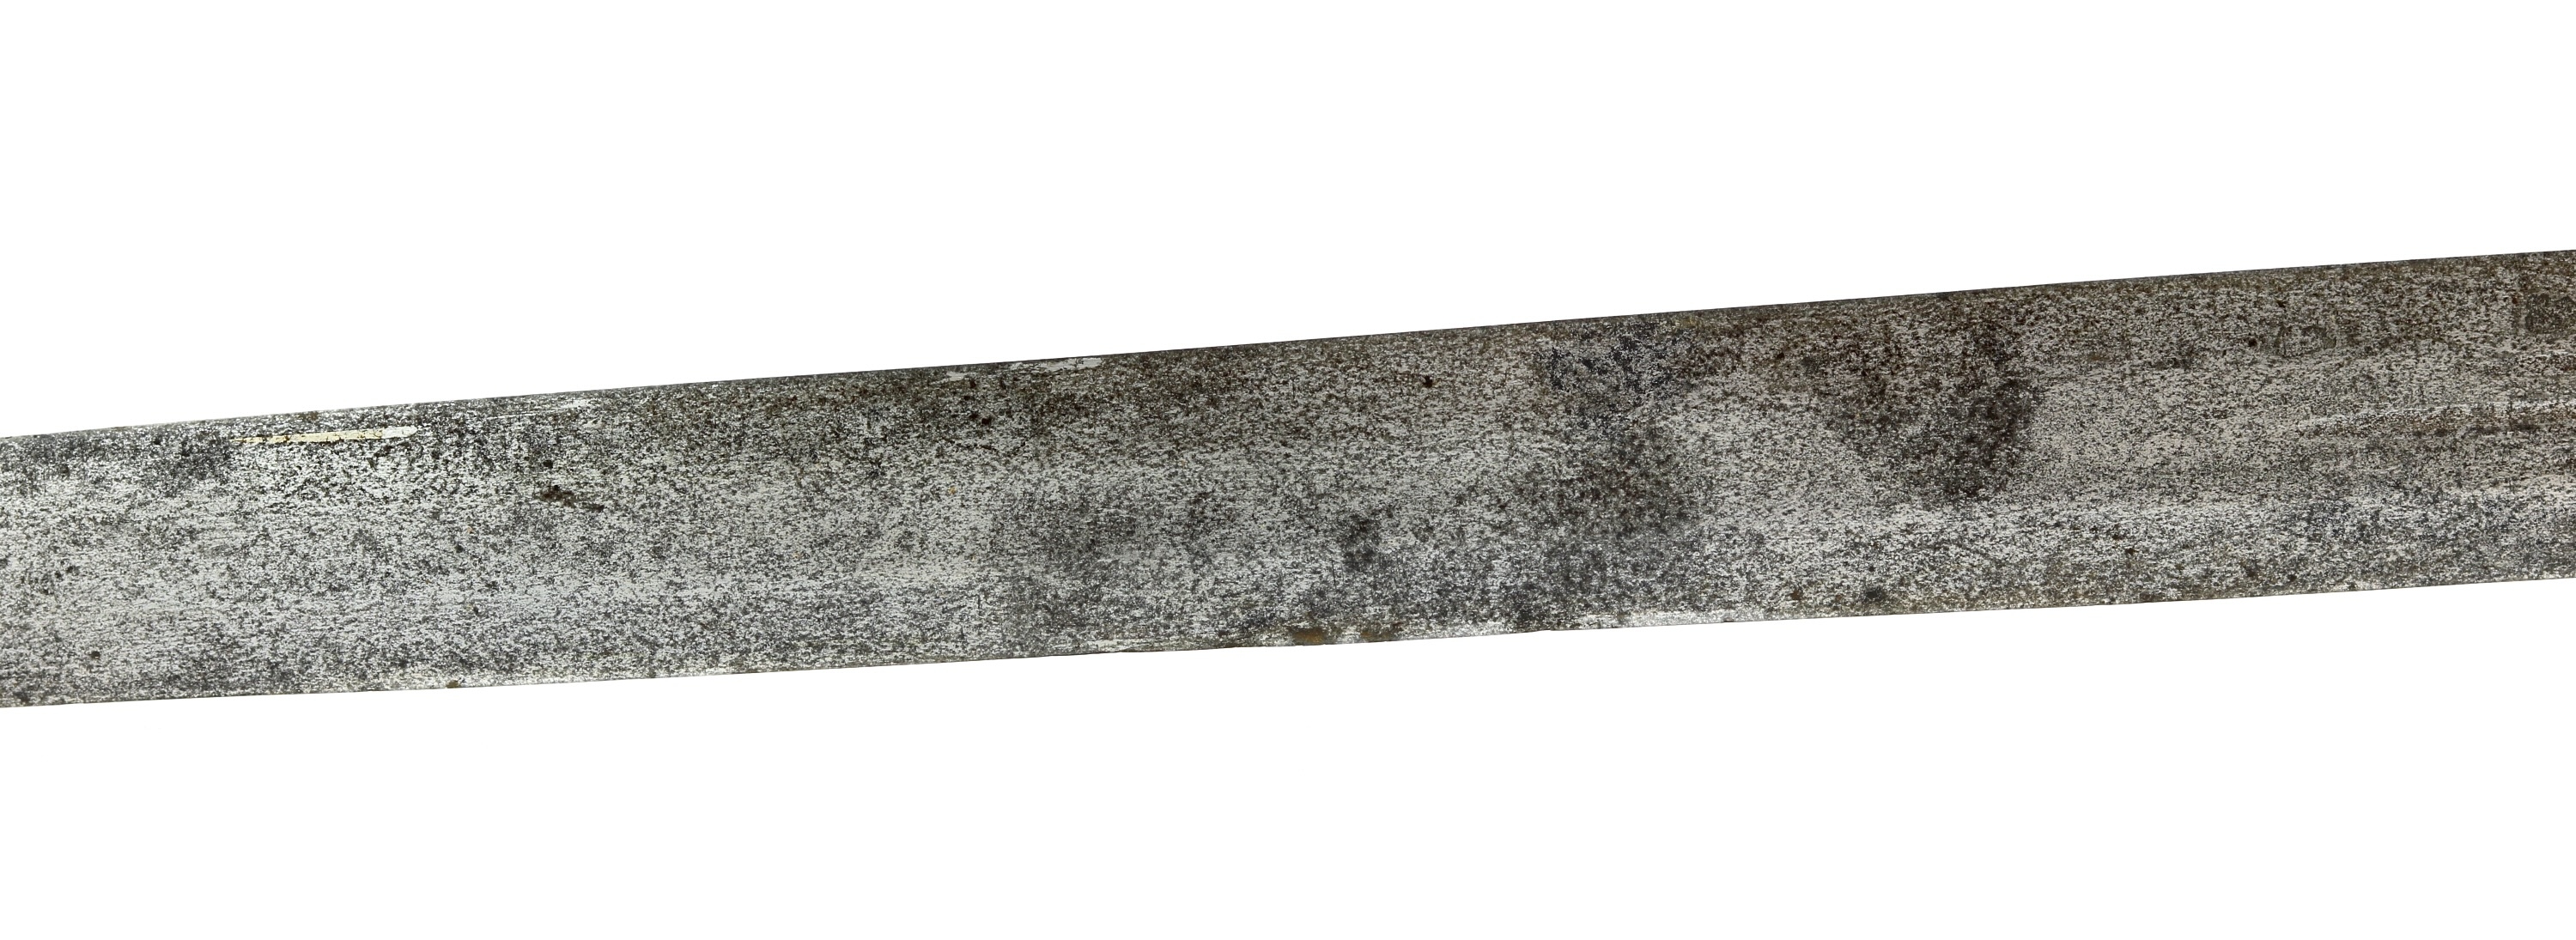 Sumatran keris panjang with European blade